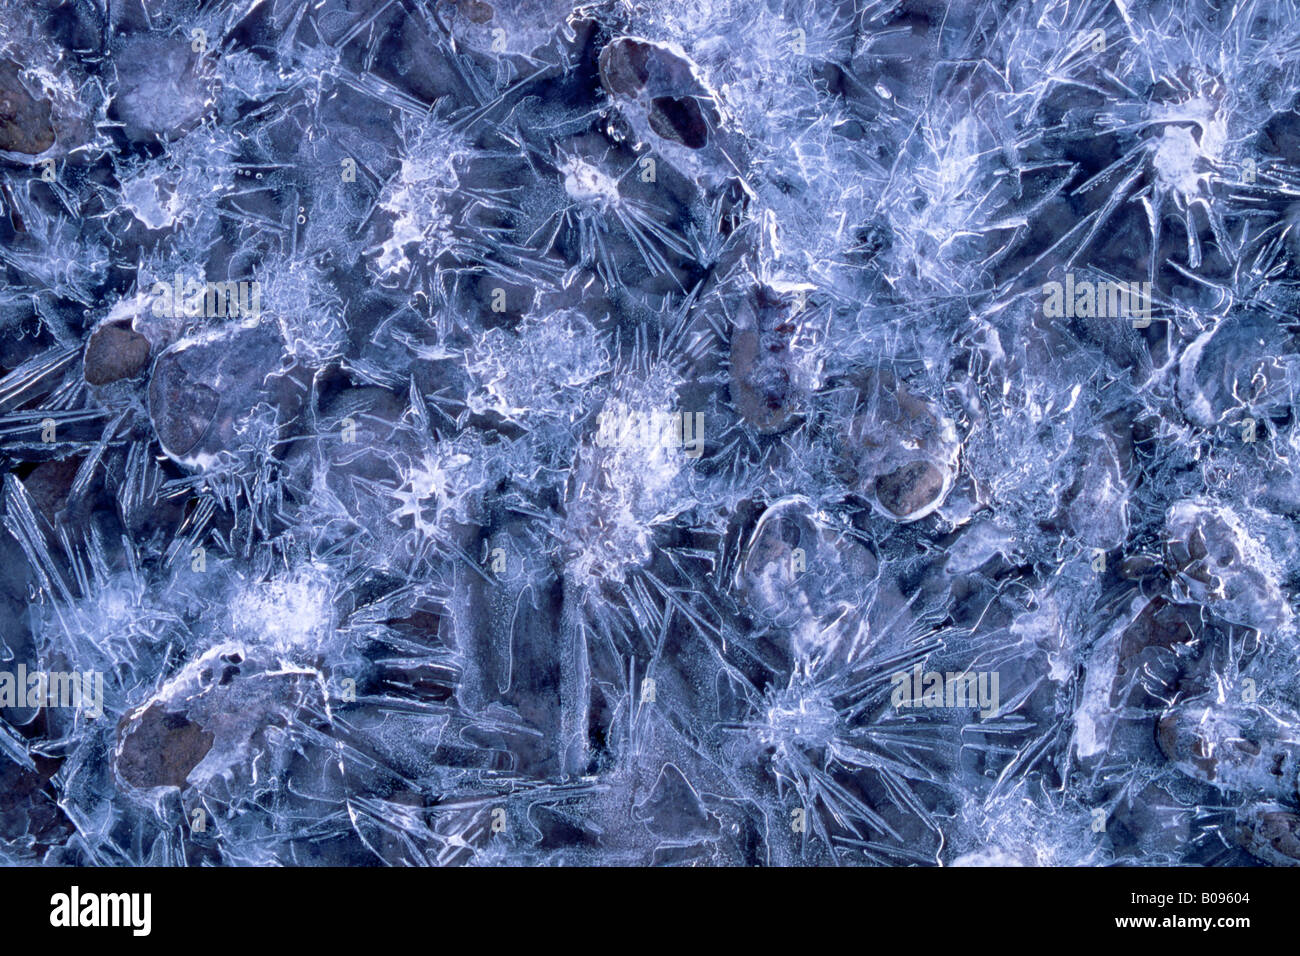 Ice crystal formations, Inn, Schwaz, Tyrol, Austria, Europe Stock Photo